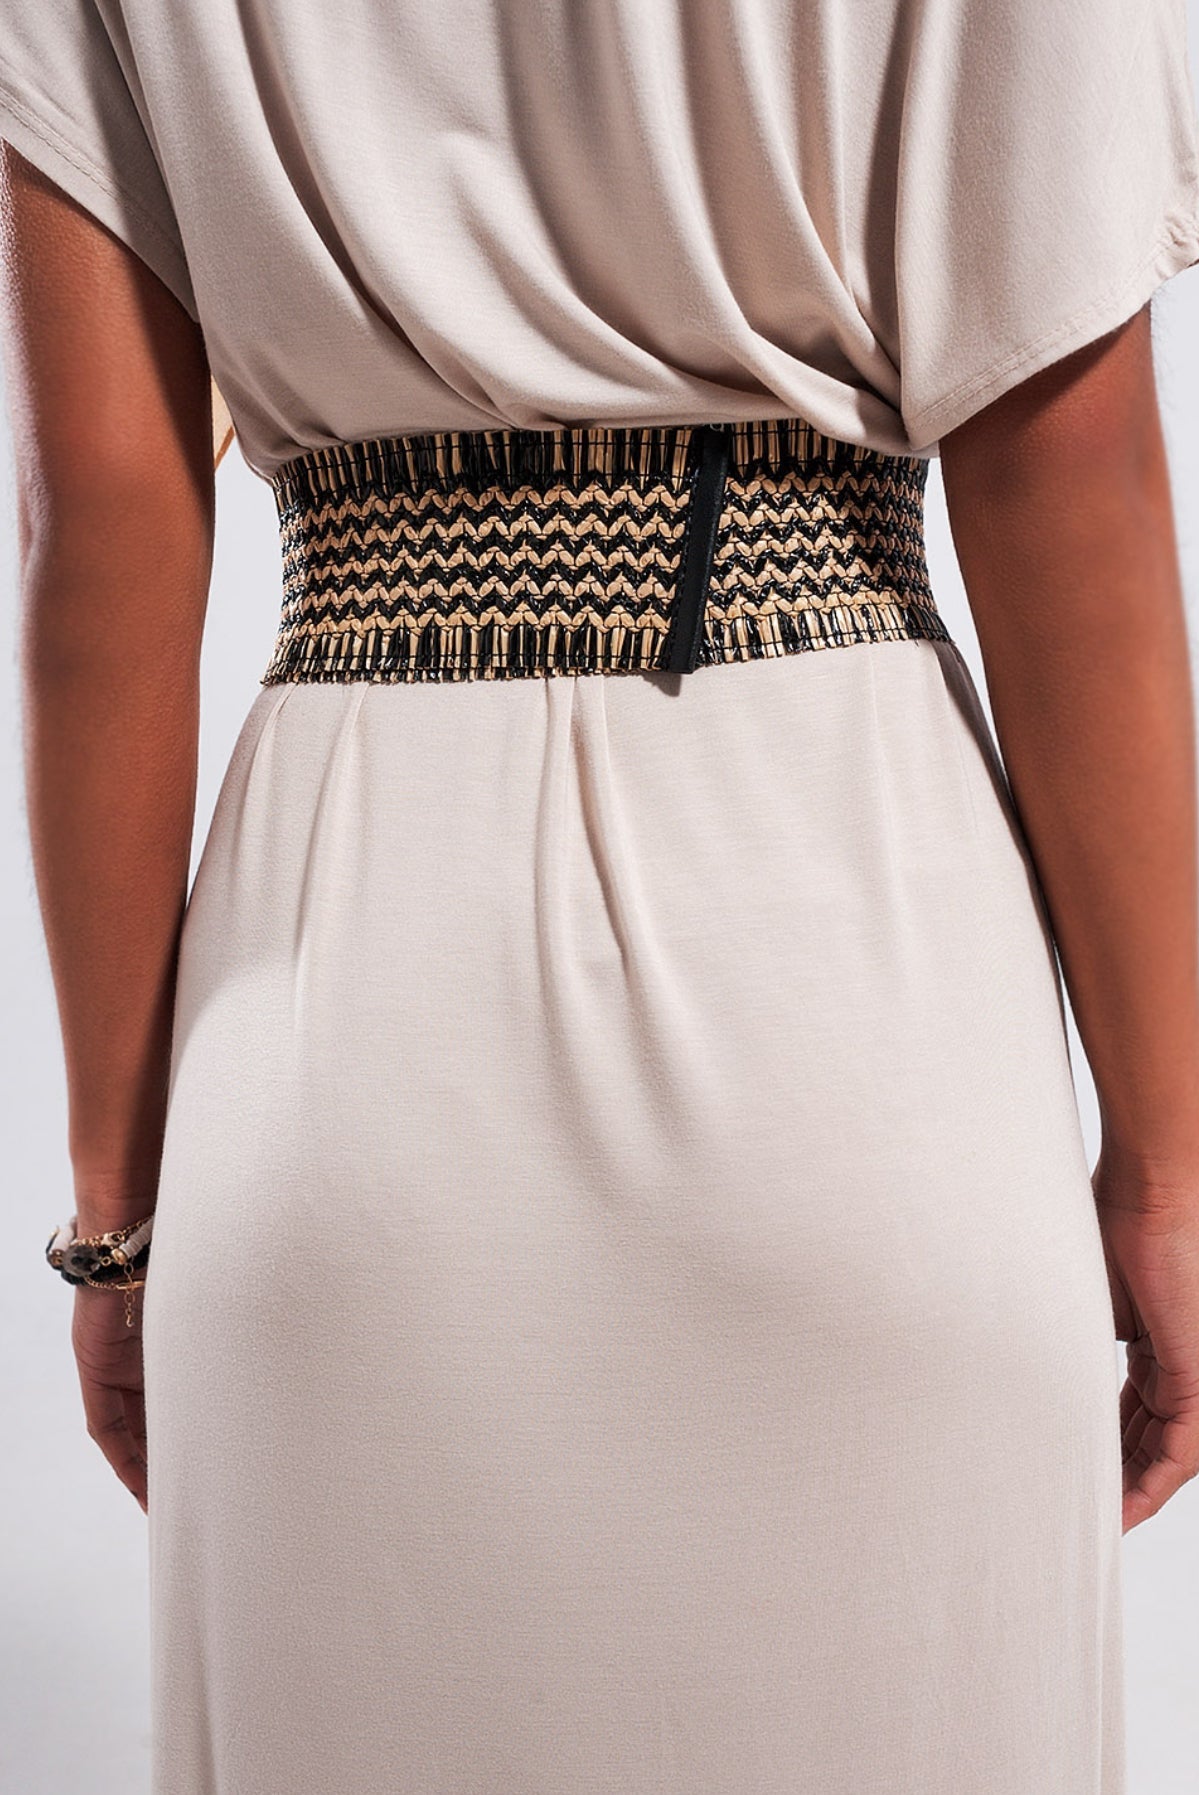 Beige Midi Dress - Premium simple from Tooksie - Just $46.99! Shop now at Tooksie